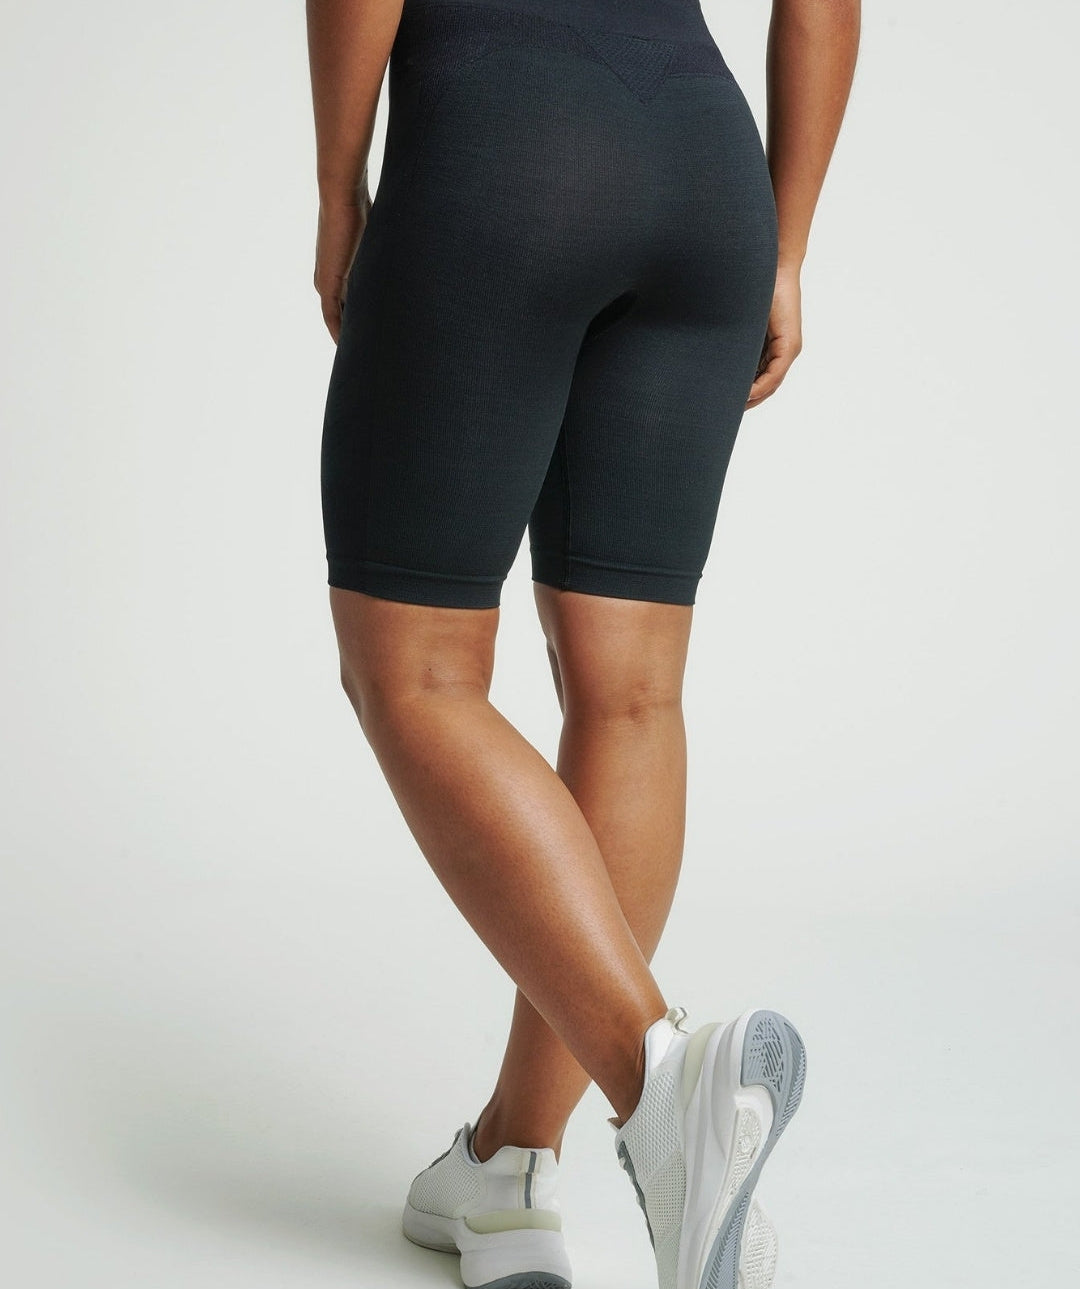 Hummel® - Clea Seamless Shorts (Sort)